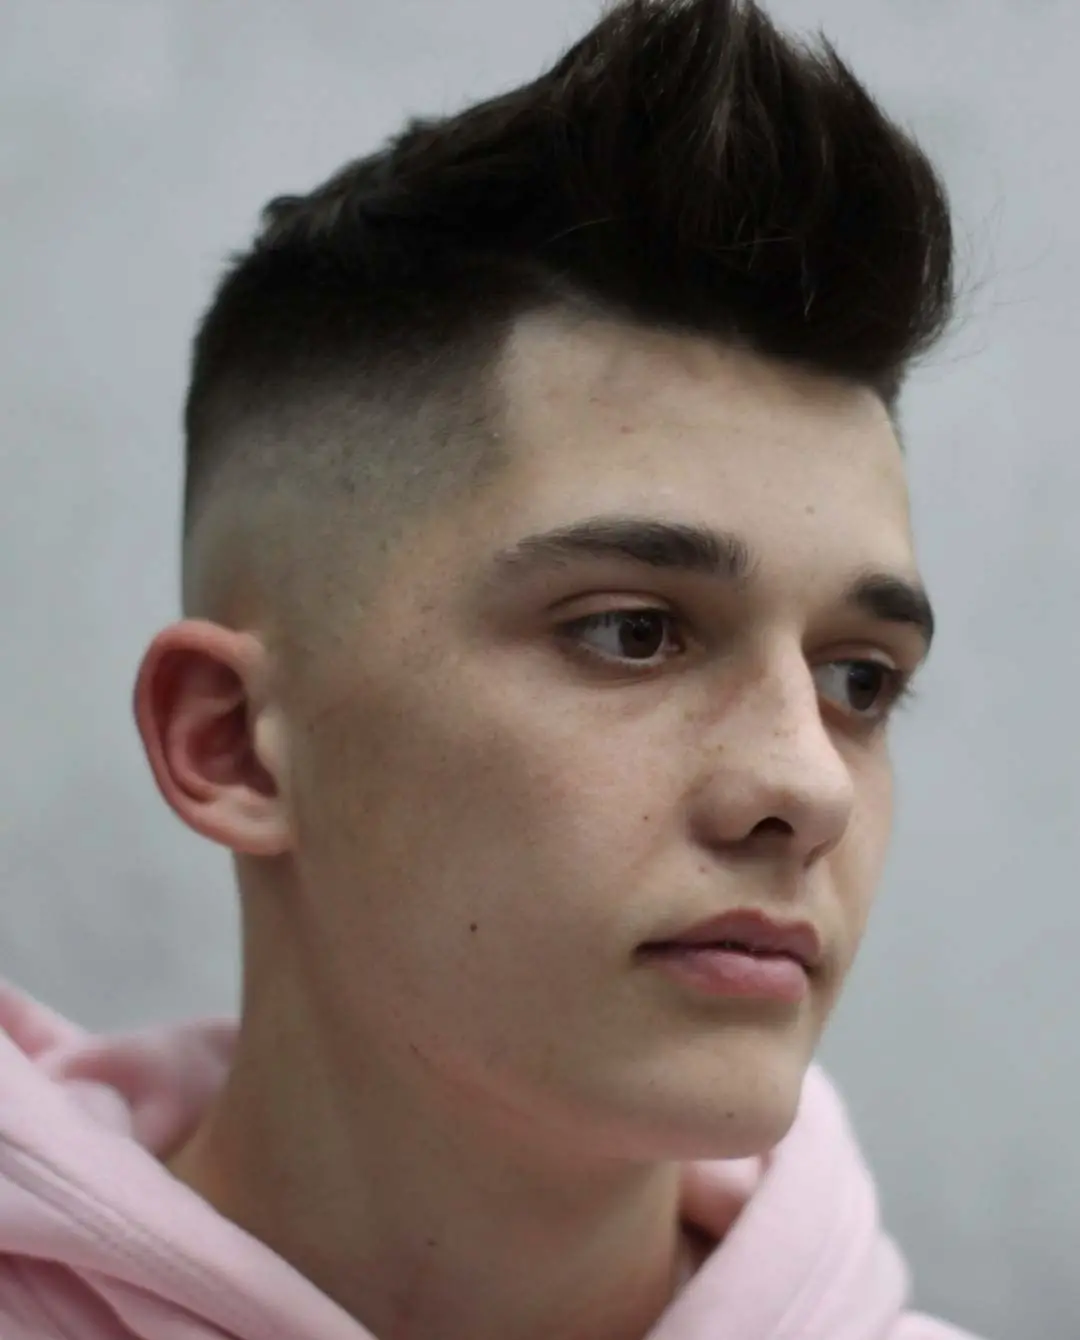 Haircuts for Teen Boys